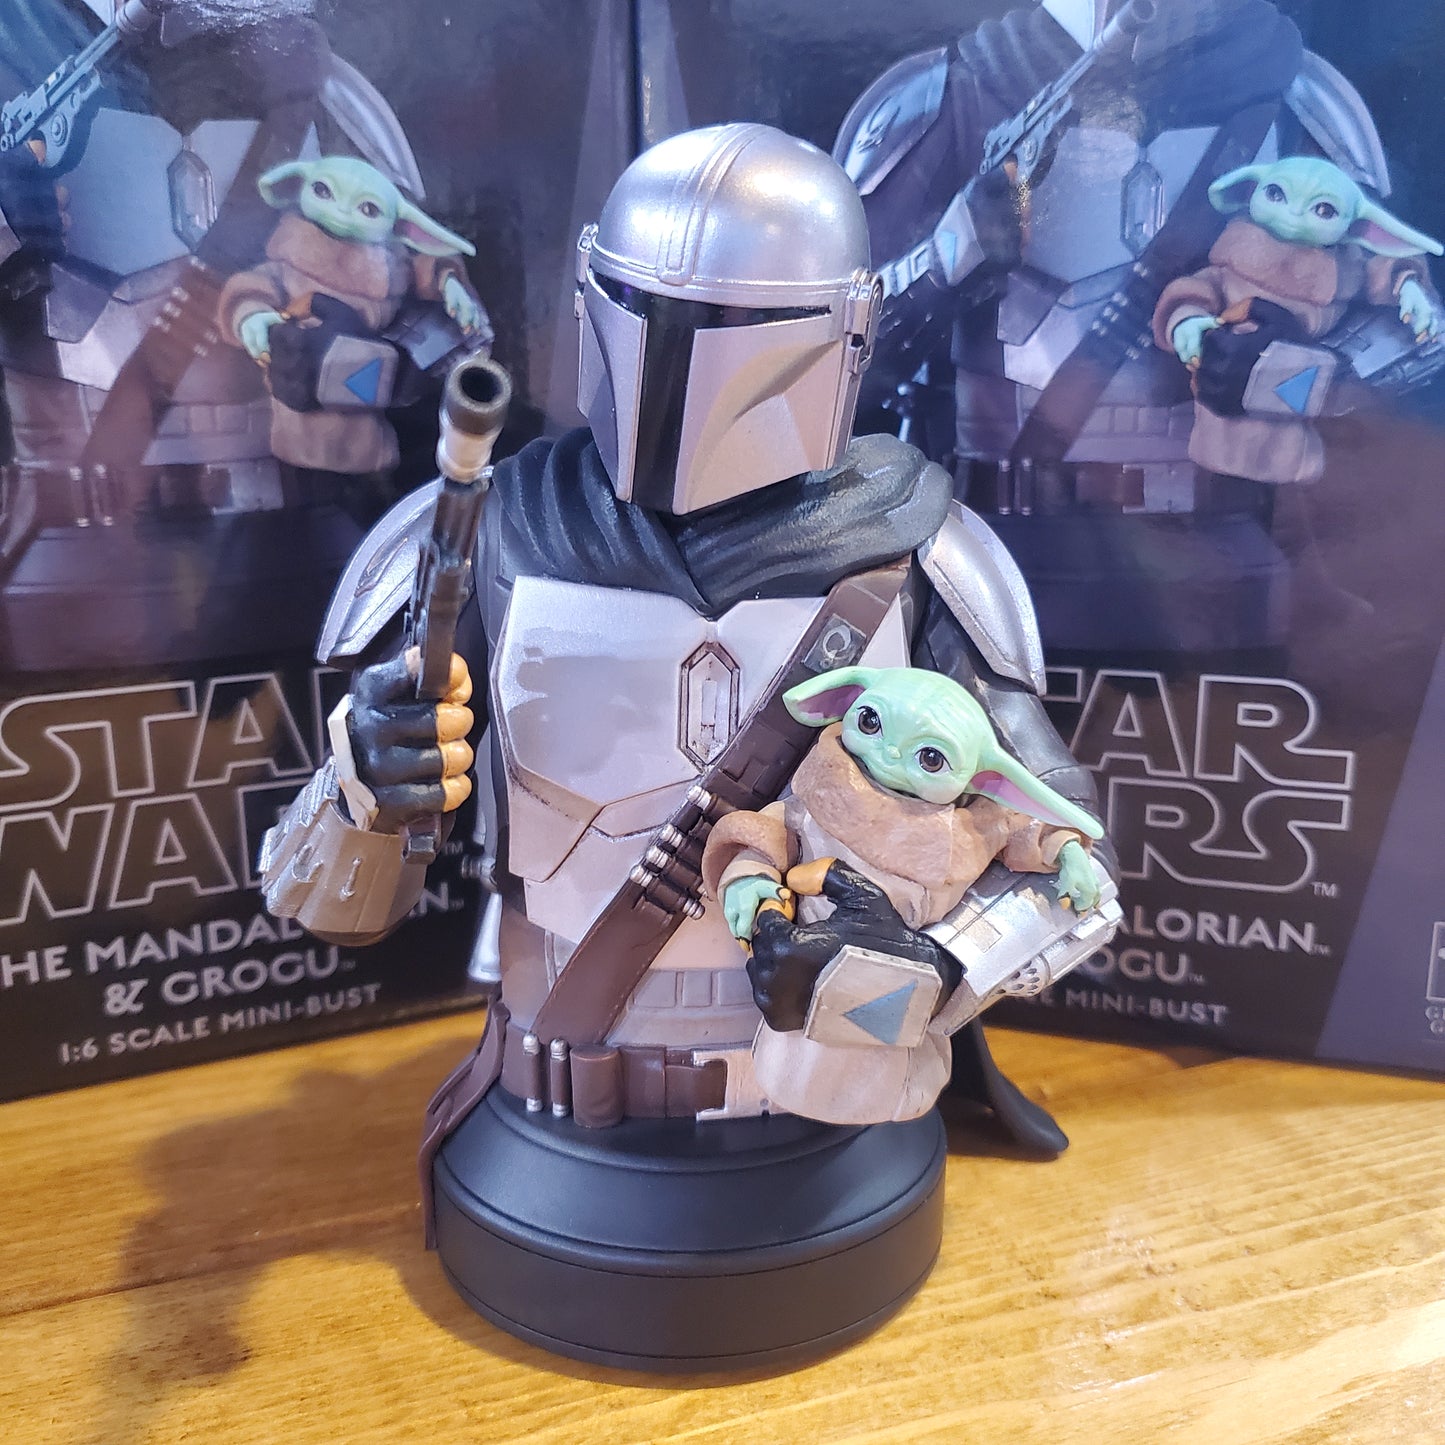 Star Wars - The Mandalorian & Grogu - 1:6 Scale Mini-Bust by Diamond Select Toys